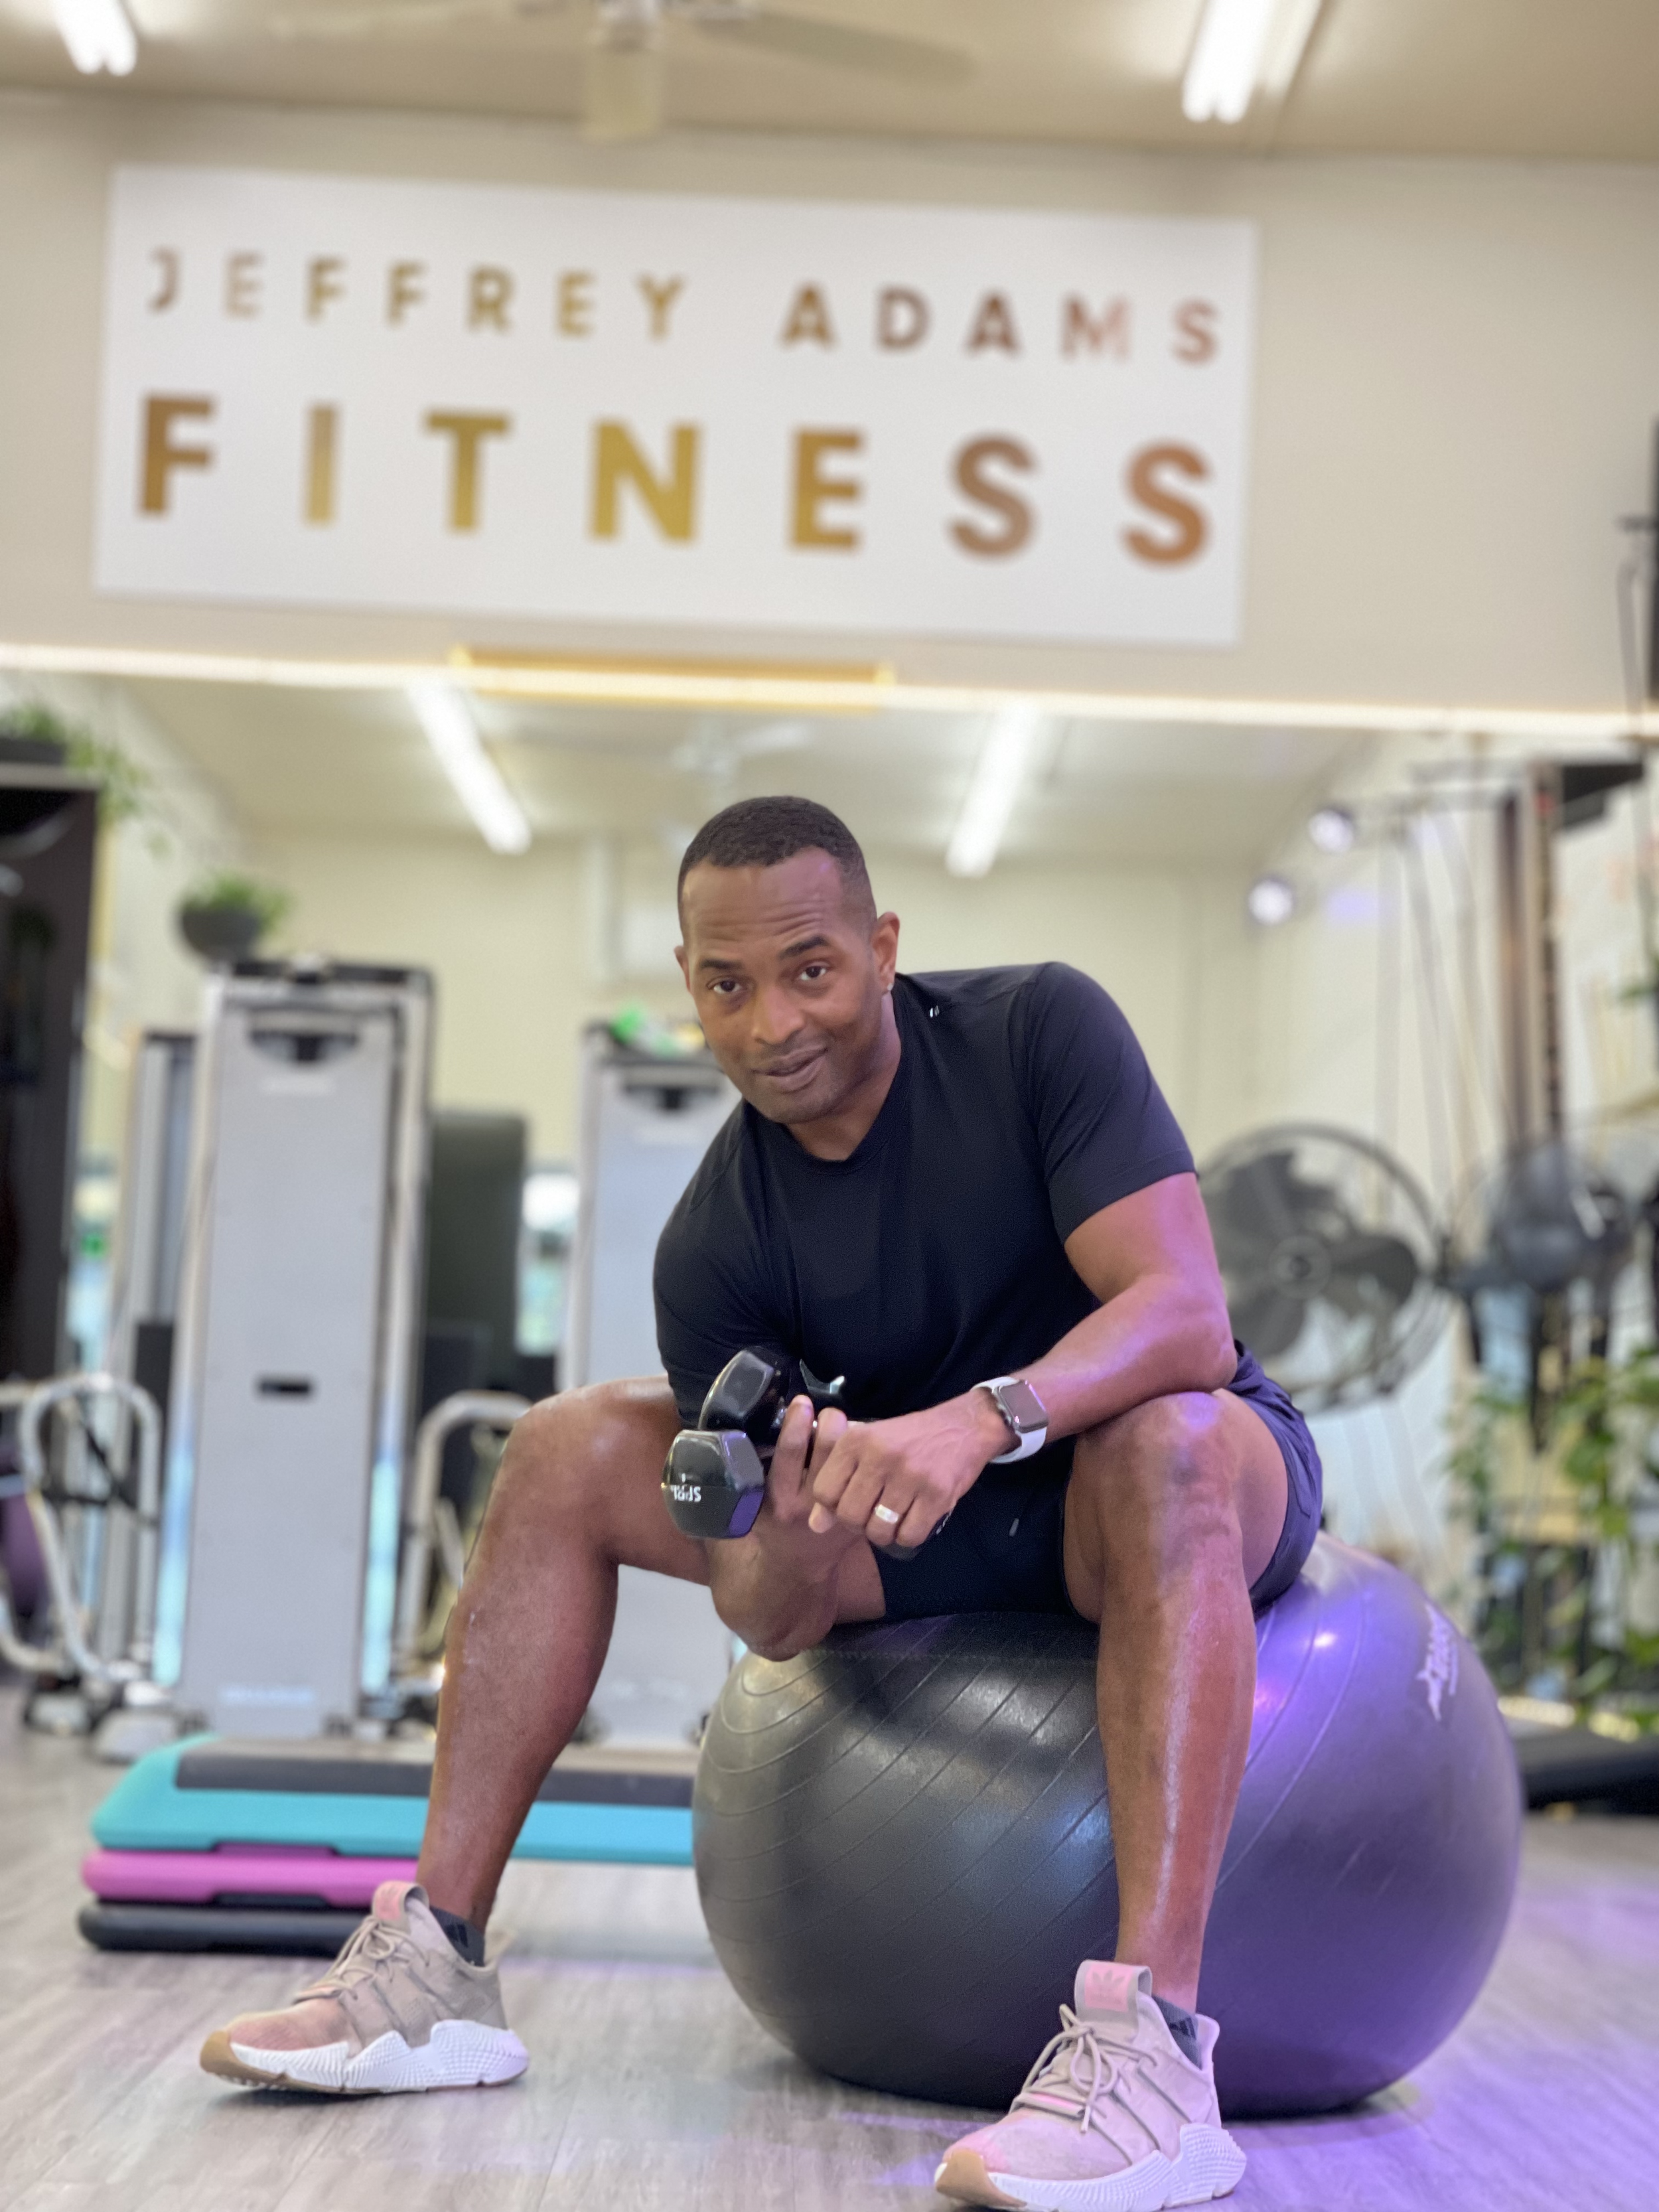 About — Jeffrey Adams Fitness